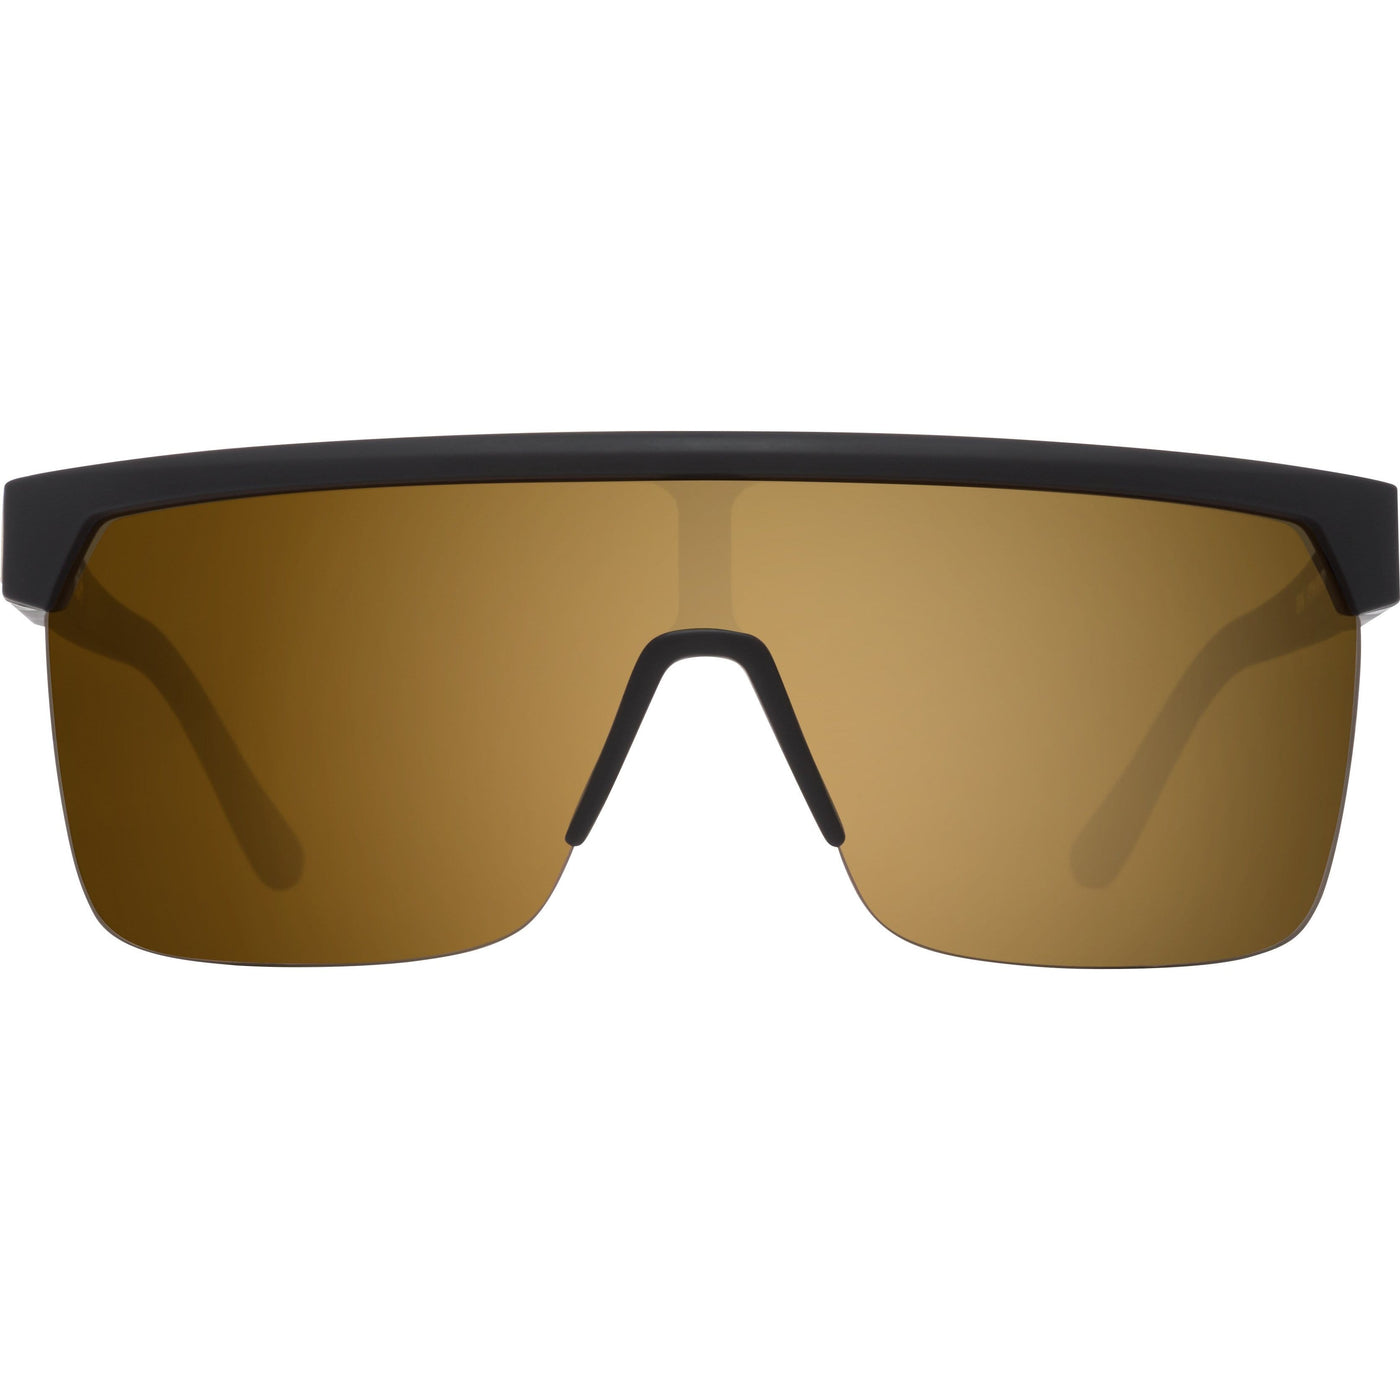 SPY FLYNN 5050 Sunglasses, Happy Lens - Gold 8Lines Shop - Fast Shipping